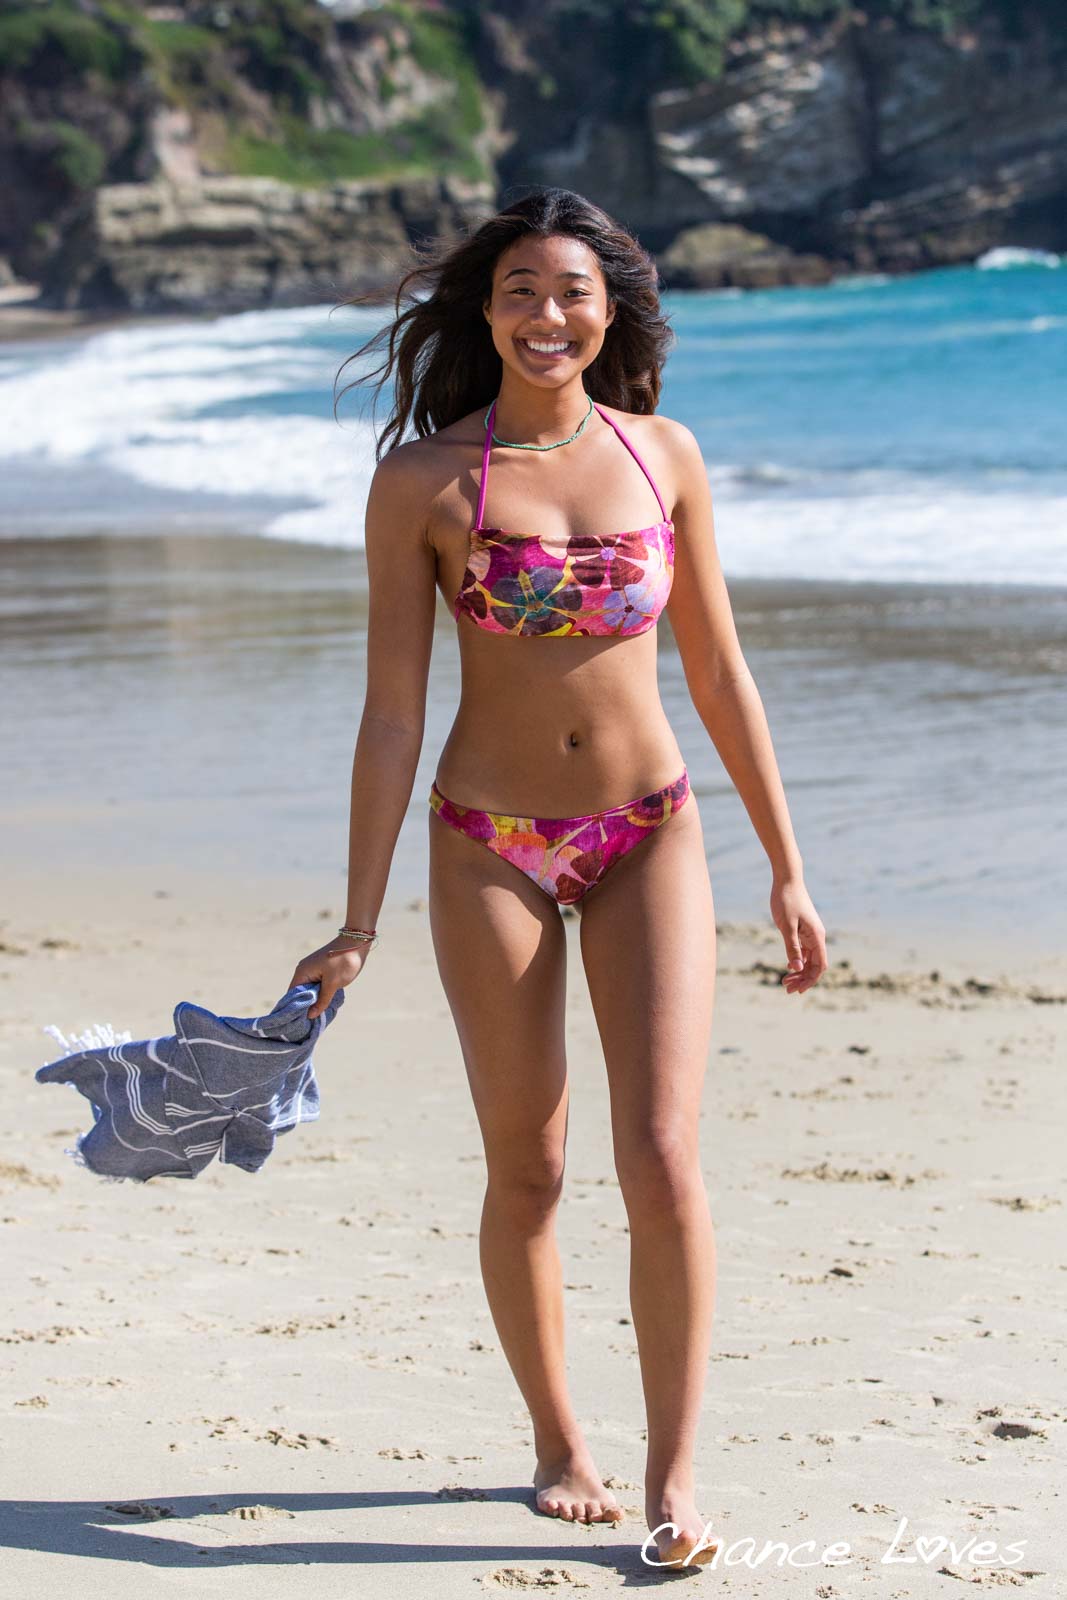 Happy teen girl beach ready walking on the sand in a beautiful colorful bikini by Chance Loves Swimwear